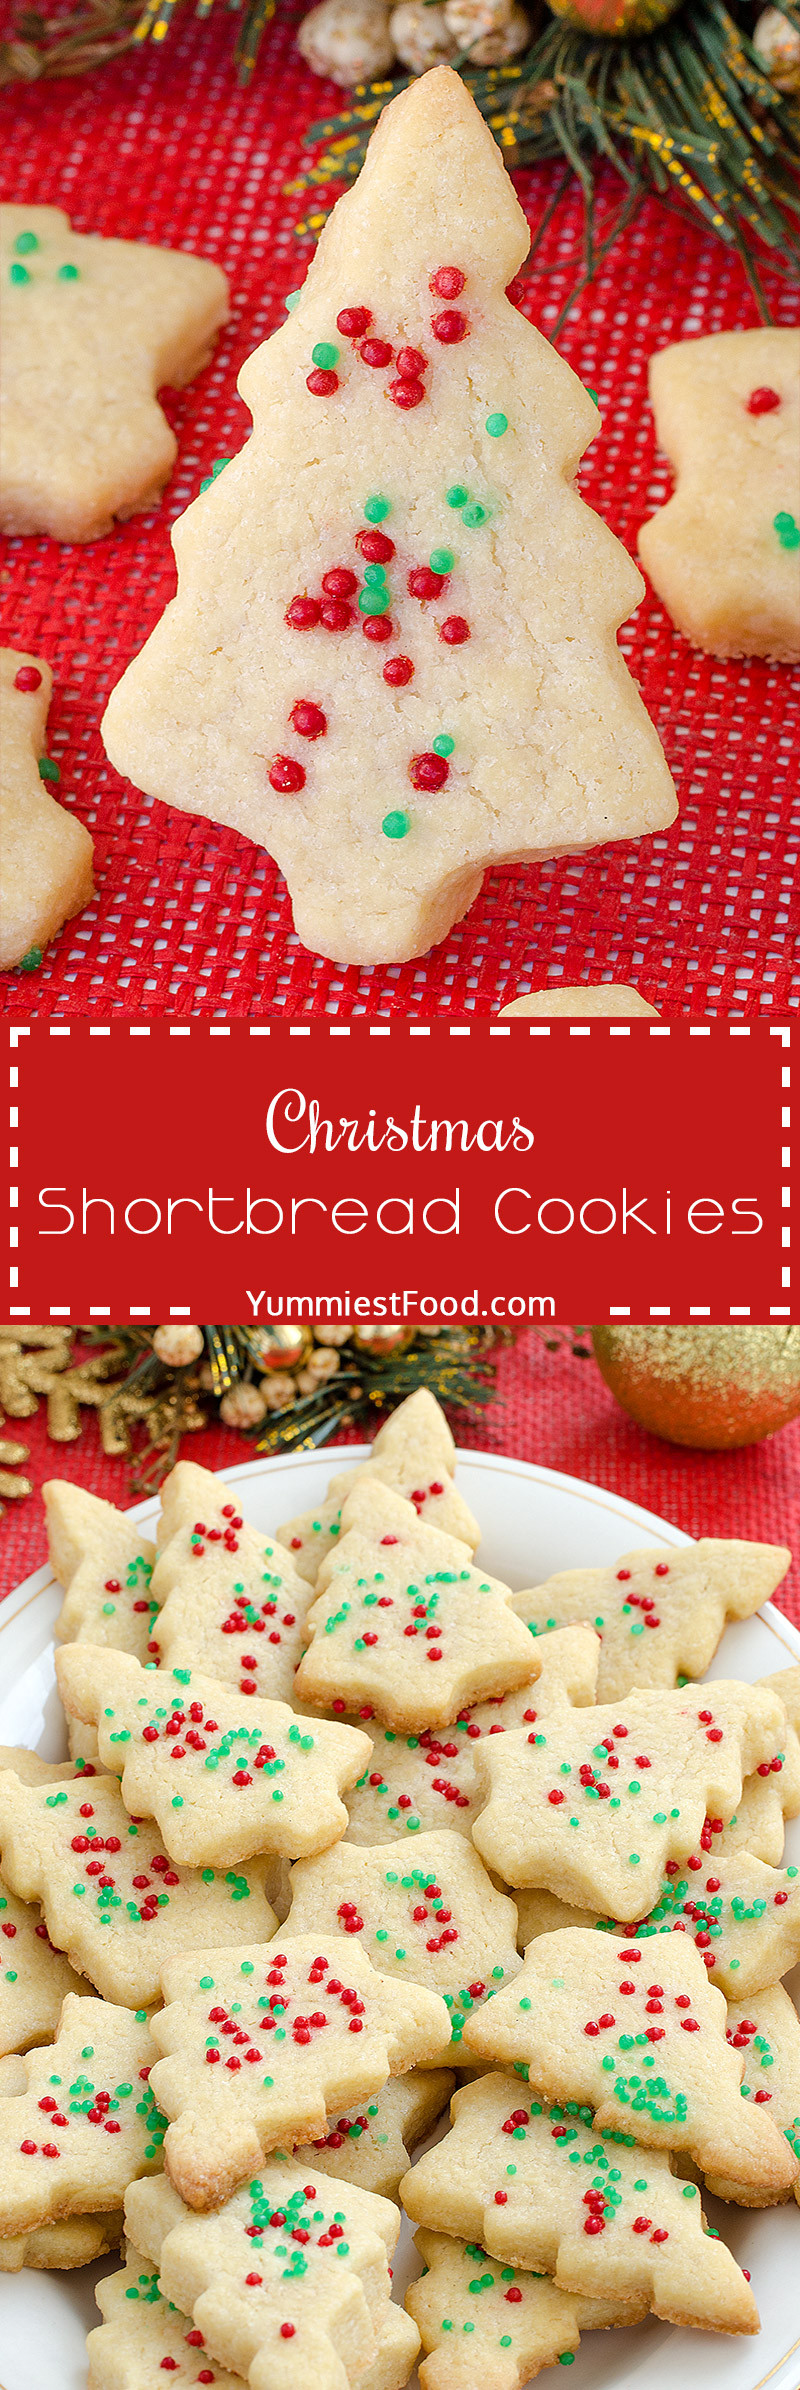 Christmas Shortbread Cookies
 Christmas Shortbread Cookies Recipe from Yummiest Food